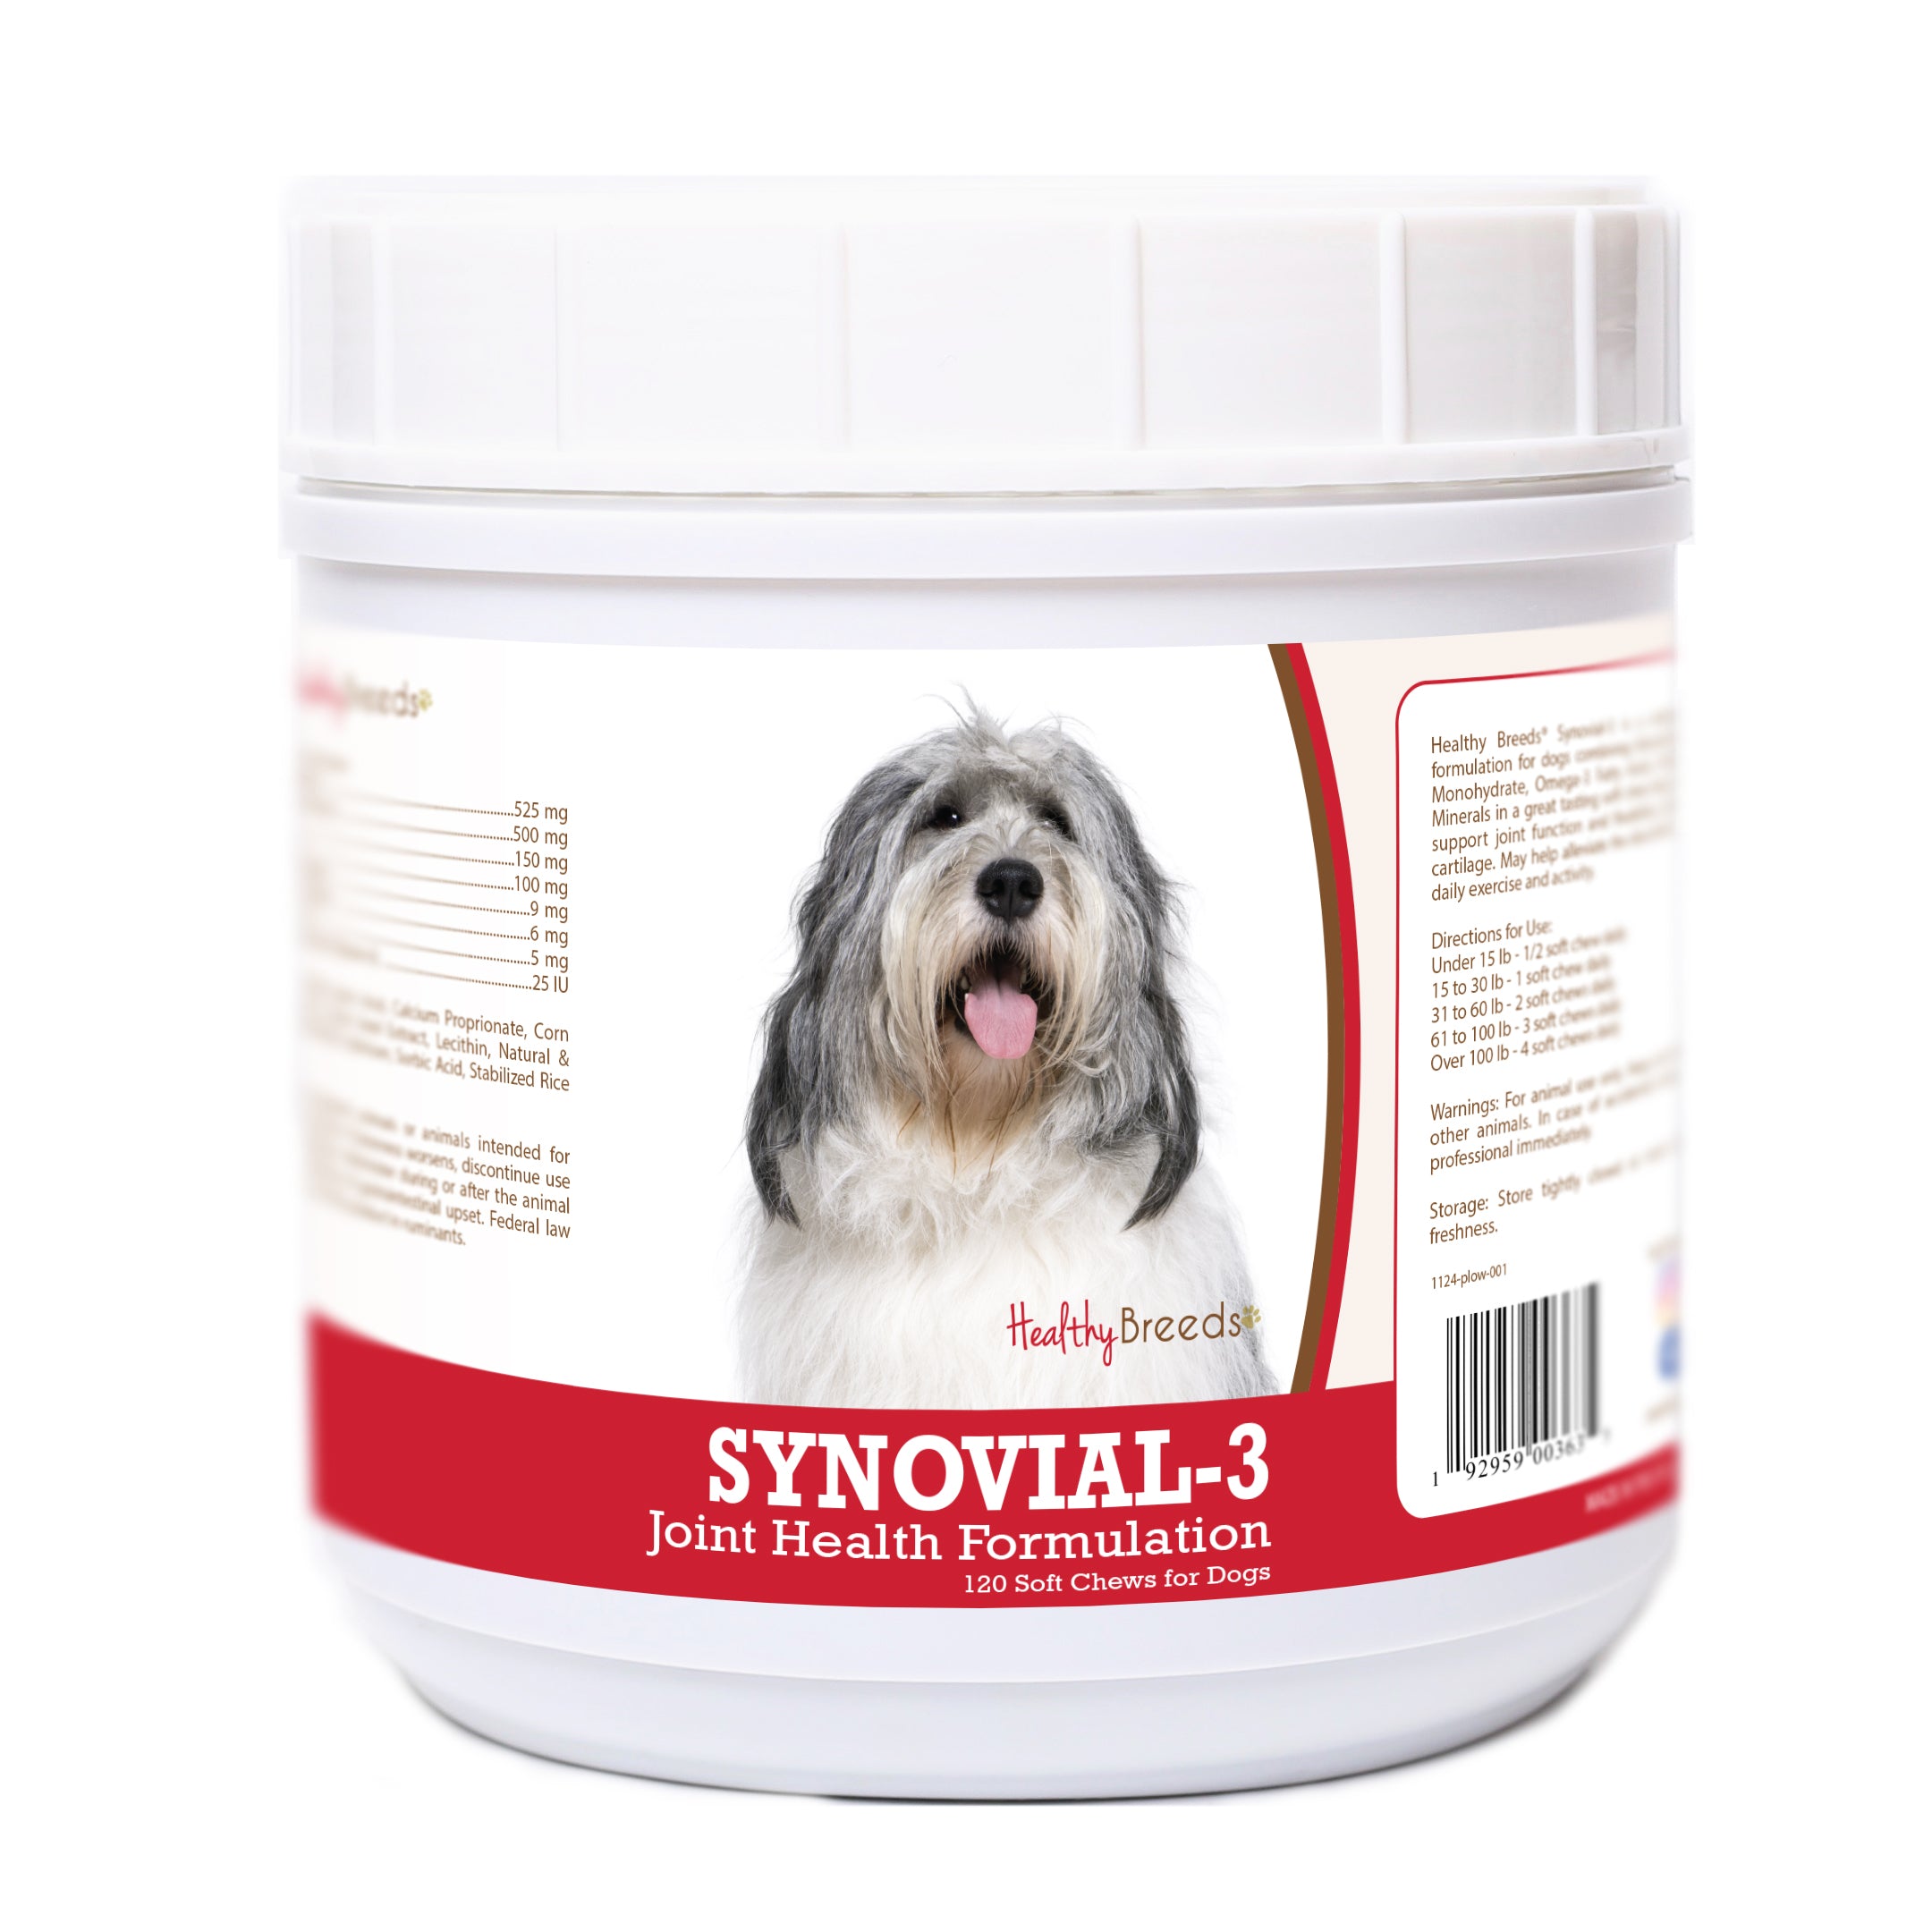 Polish Lowland Sheepdog Synovial-3 Joint Health Formulation Soft Chews 120 Count